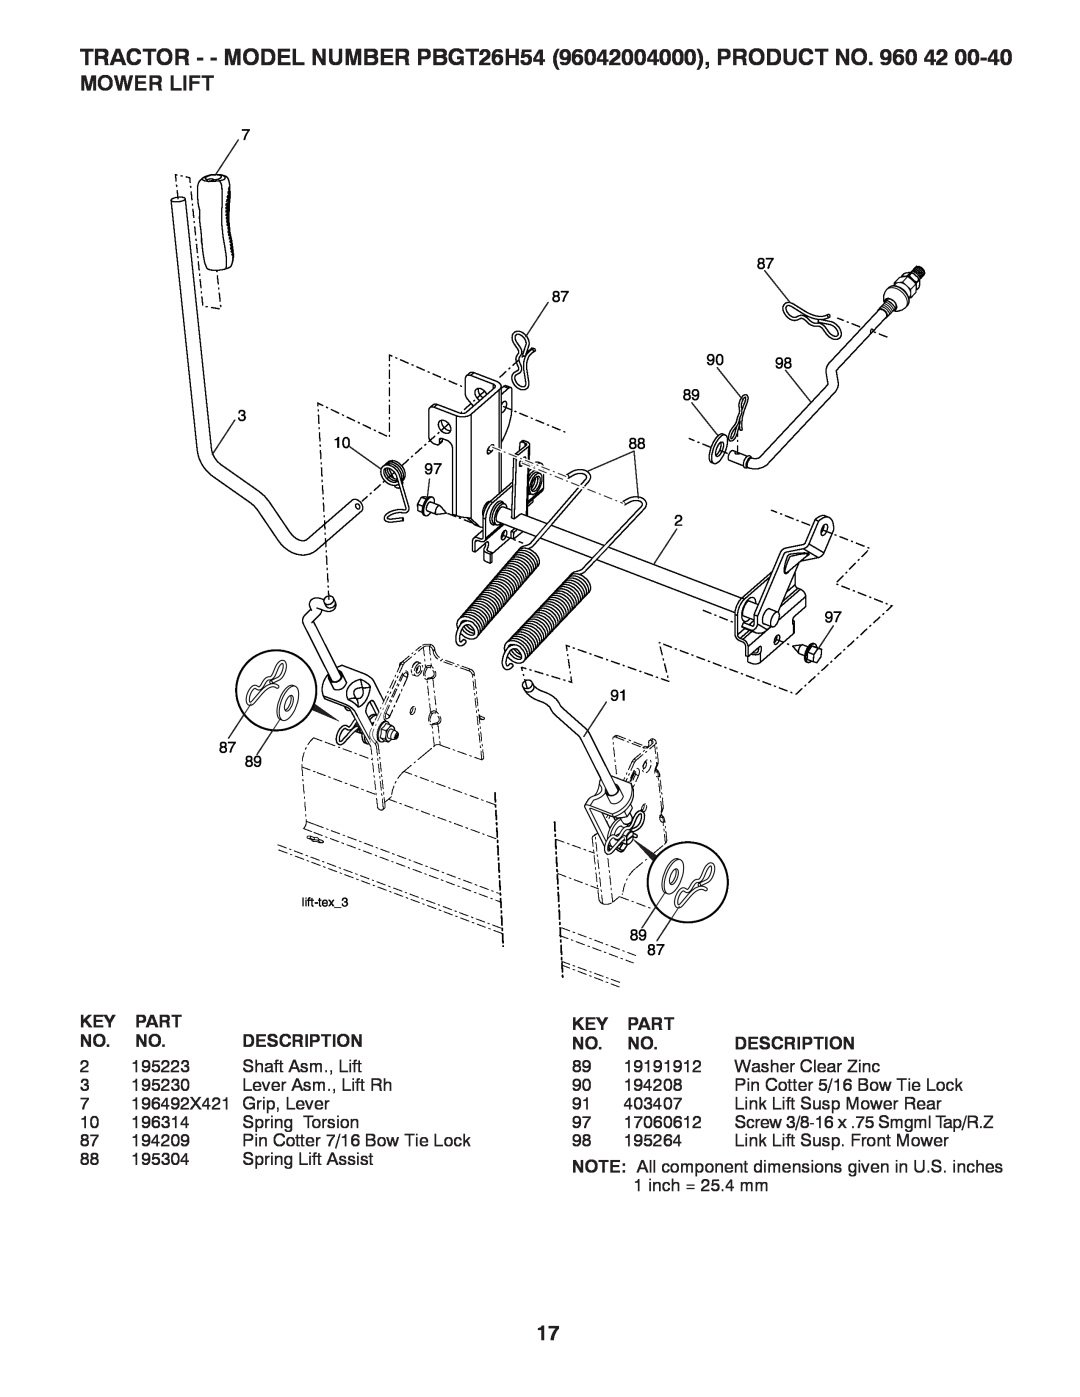 Poulan 409632 manual Mower Lift, TRACTOR - - MODEL NUMBER PBGT26H54 96042004000, PRODUCT NO, lift-tex3 